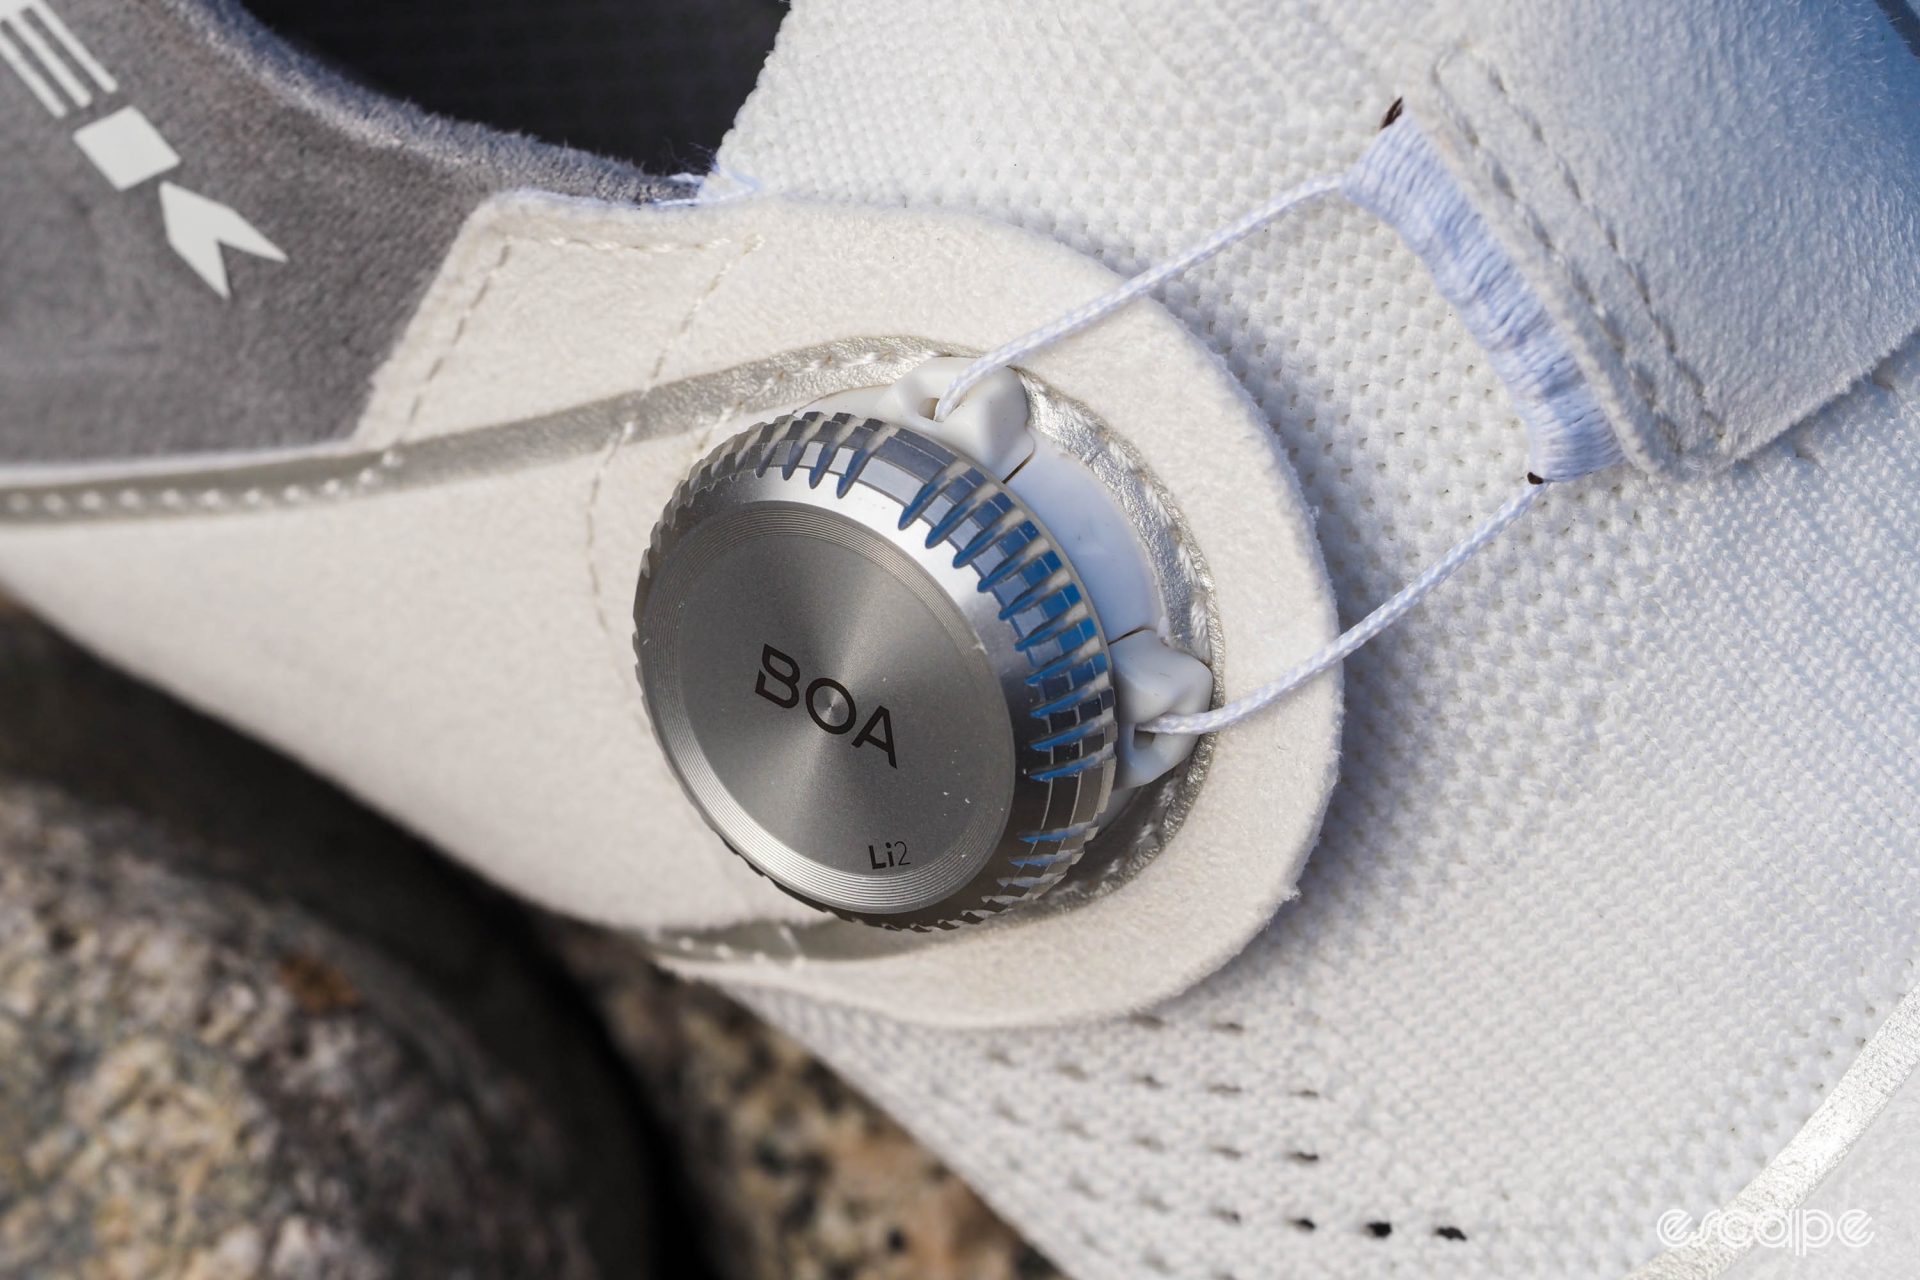 Trek RSL Knit road shoe Boa Li2 aluminum dial